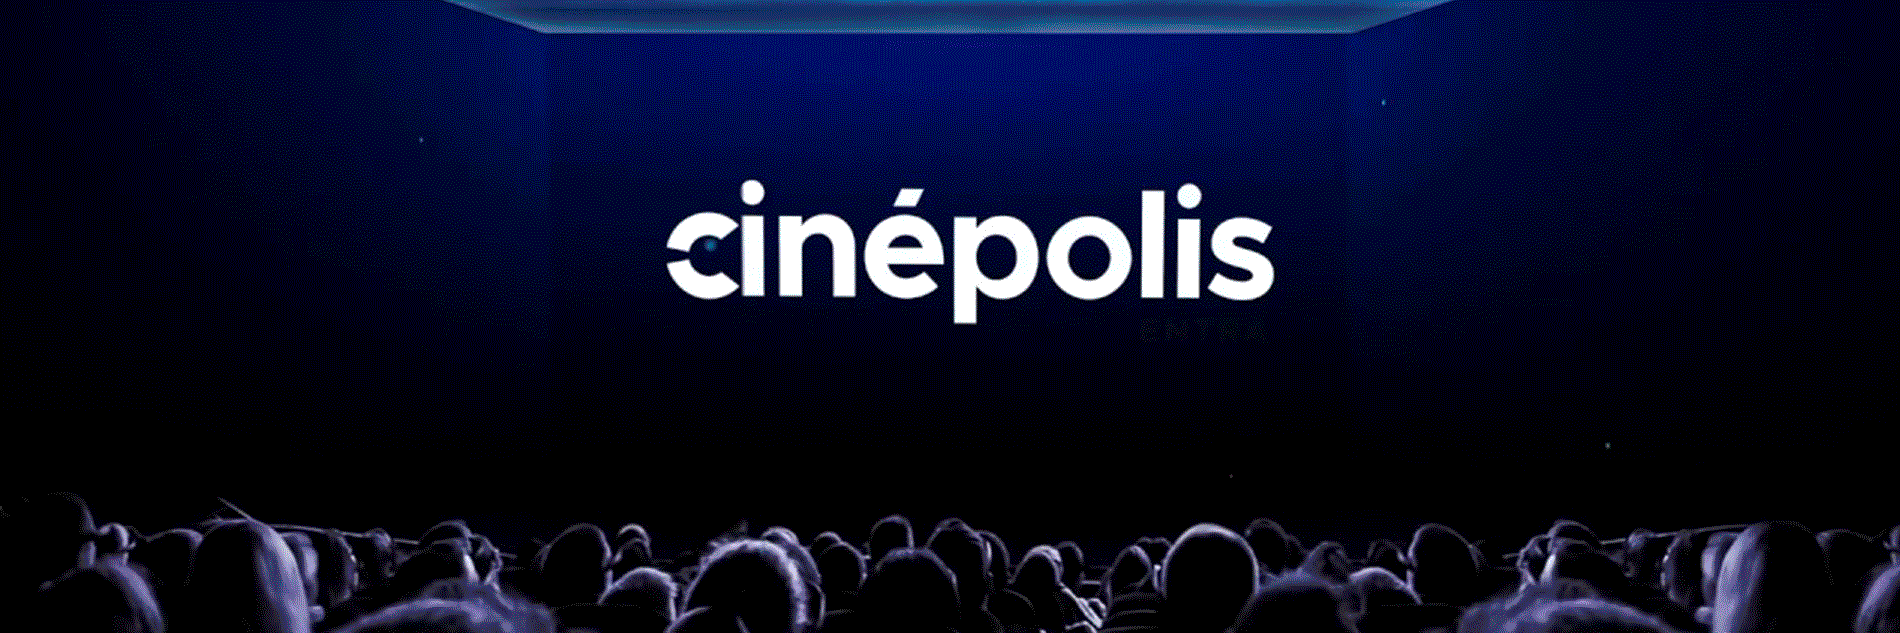 Entretenimiento_cinepolis.png